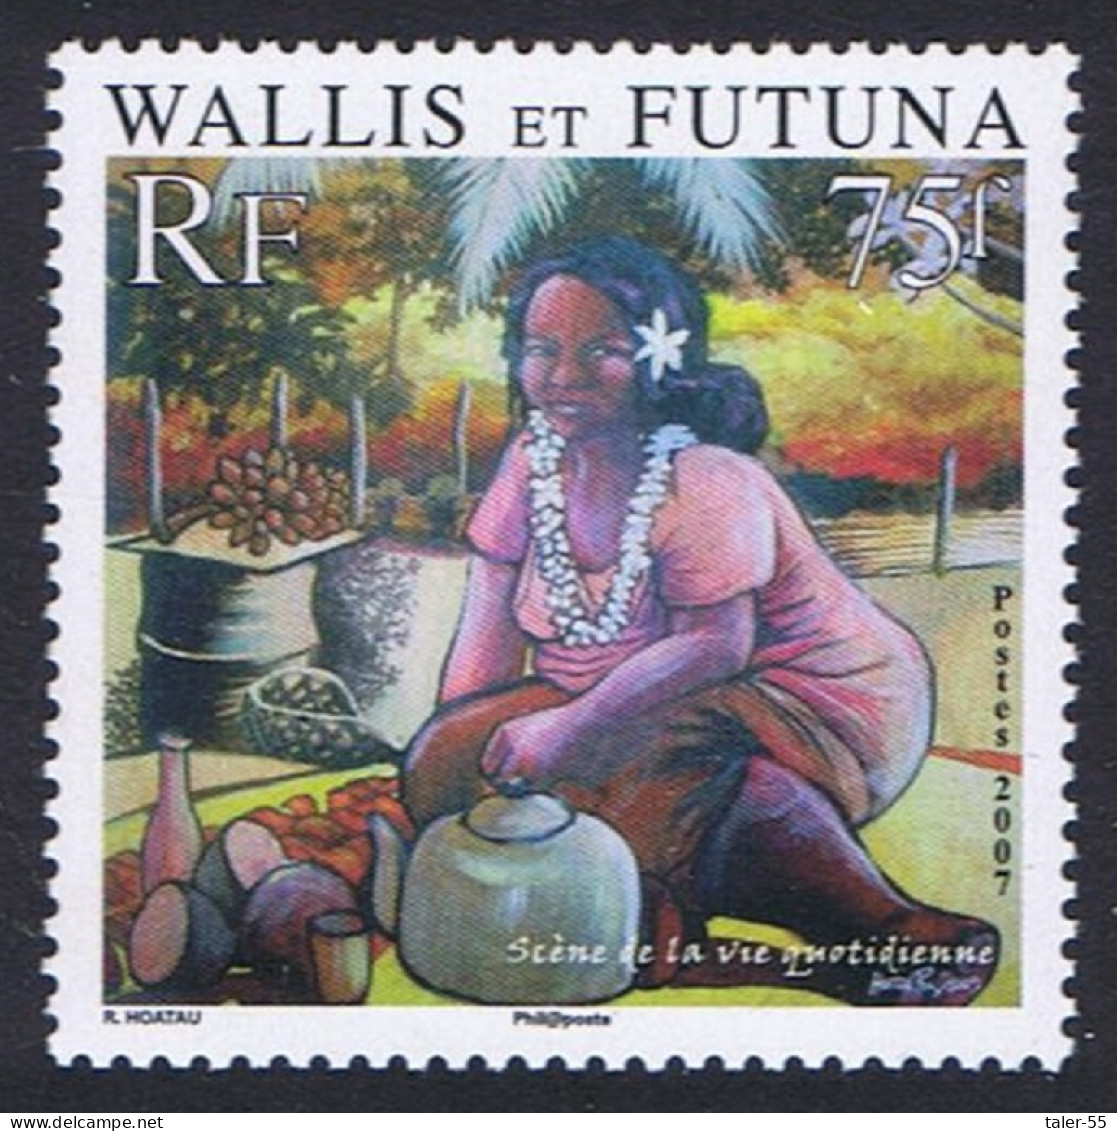 Wallis And Futuna Daily Life 2007 MNH SG#911 - Unused Stamps